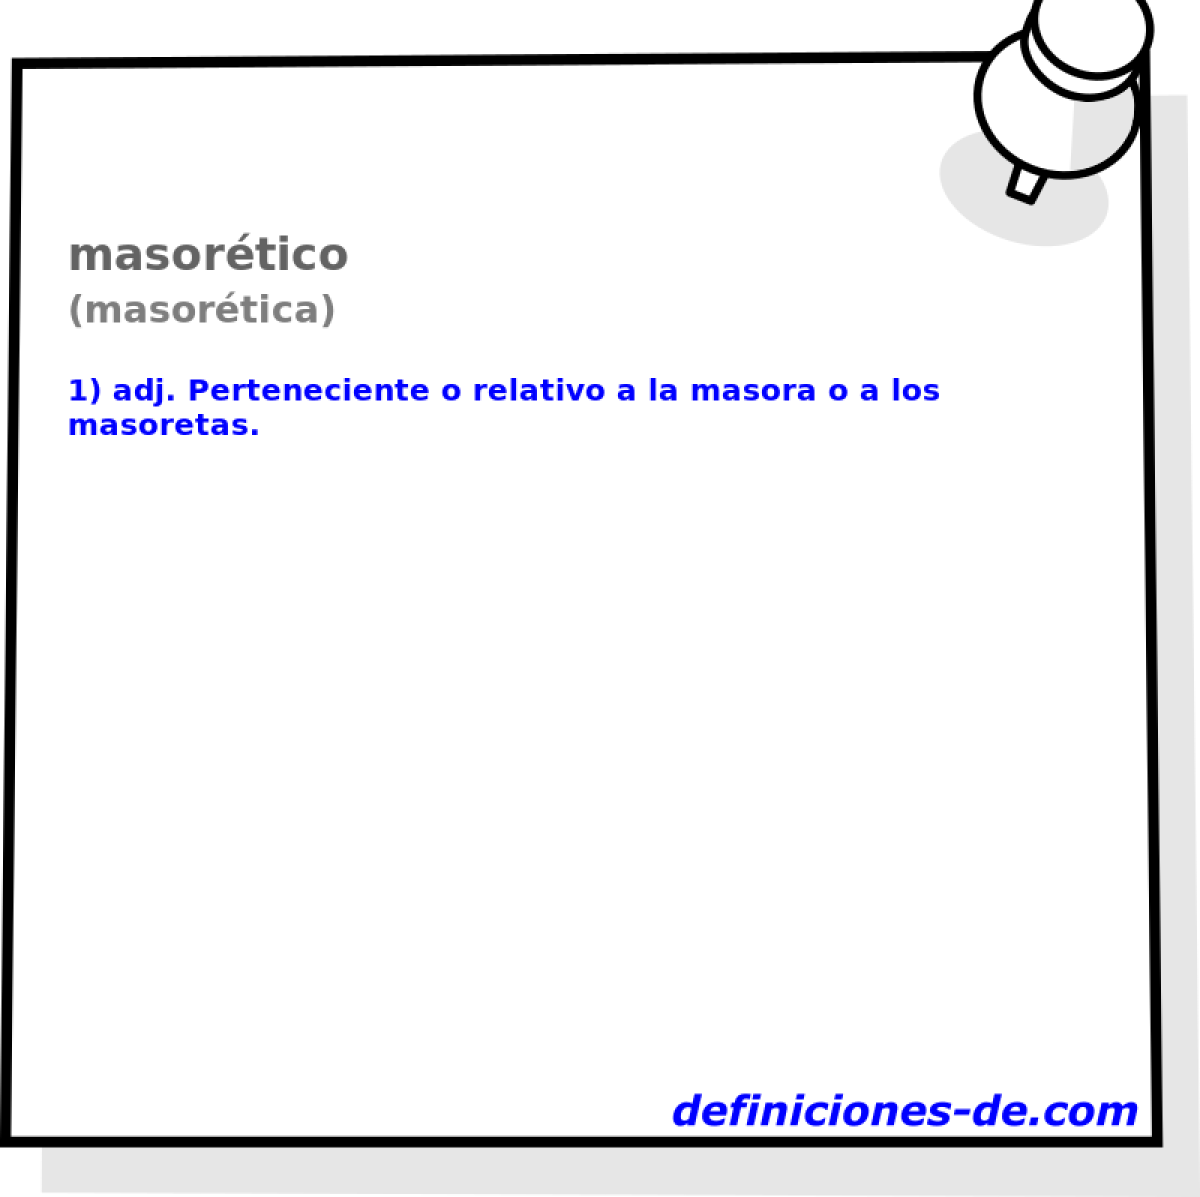 masortico (masortica)